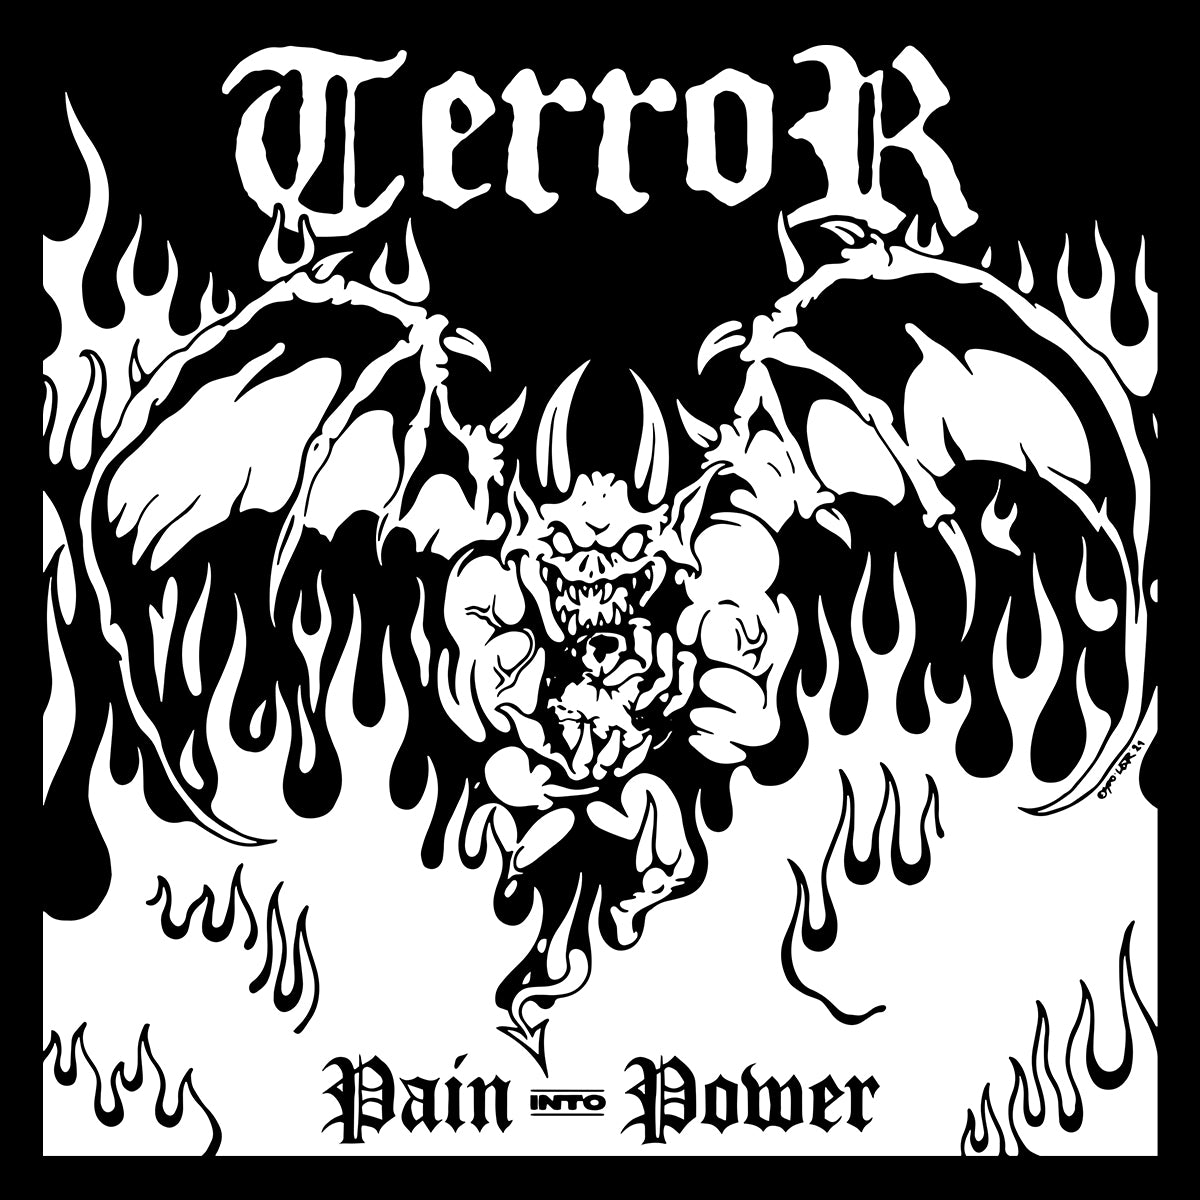 TERROR "Pain Into Power" CD